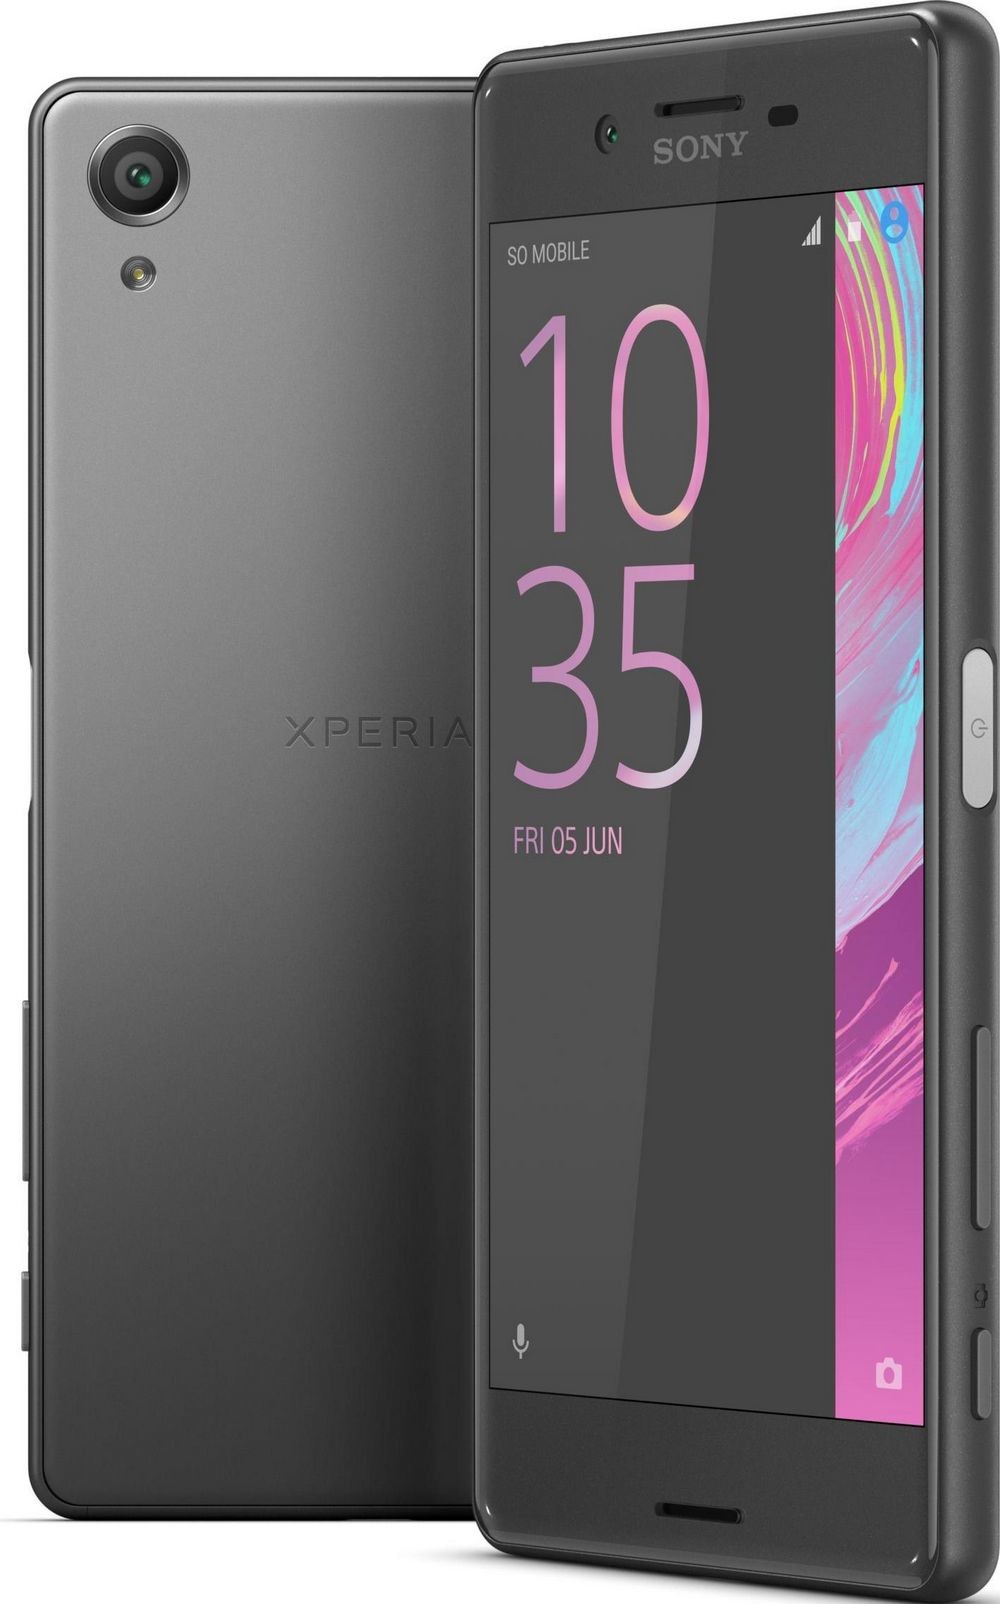 Мобильный телефон Sony Xperia X Grahite Black, 5", Qualcomm Snapdragon 650 (1.8ГГц), 3 ГБ, 32ГБ